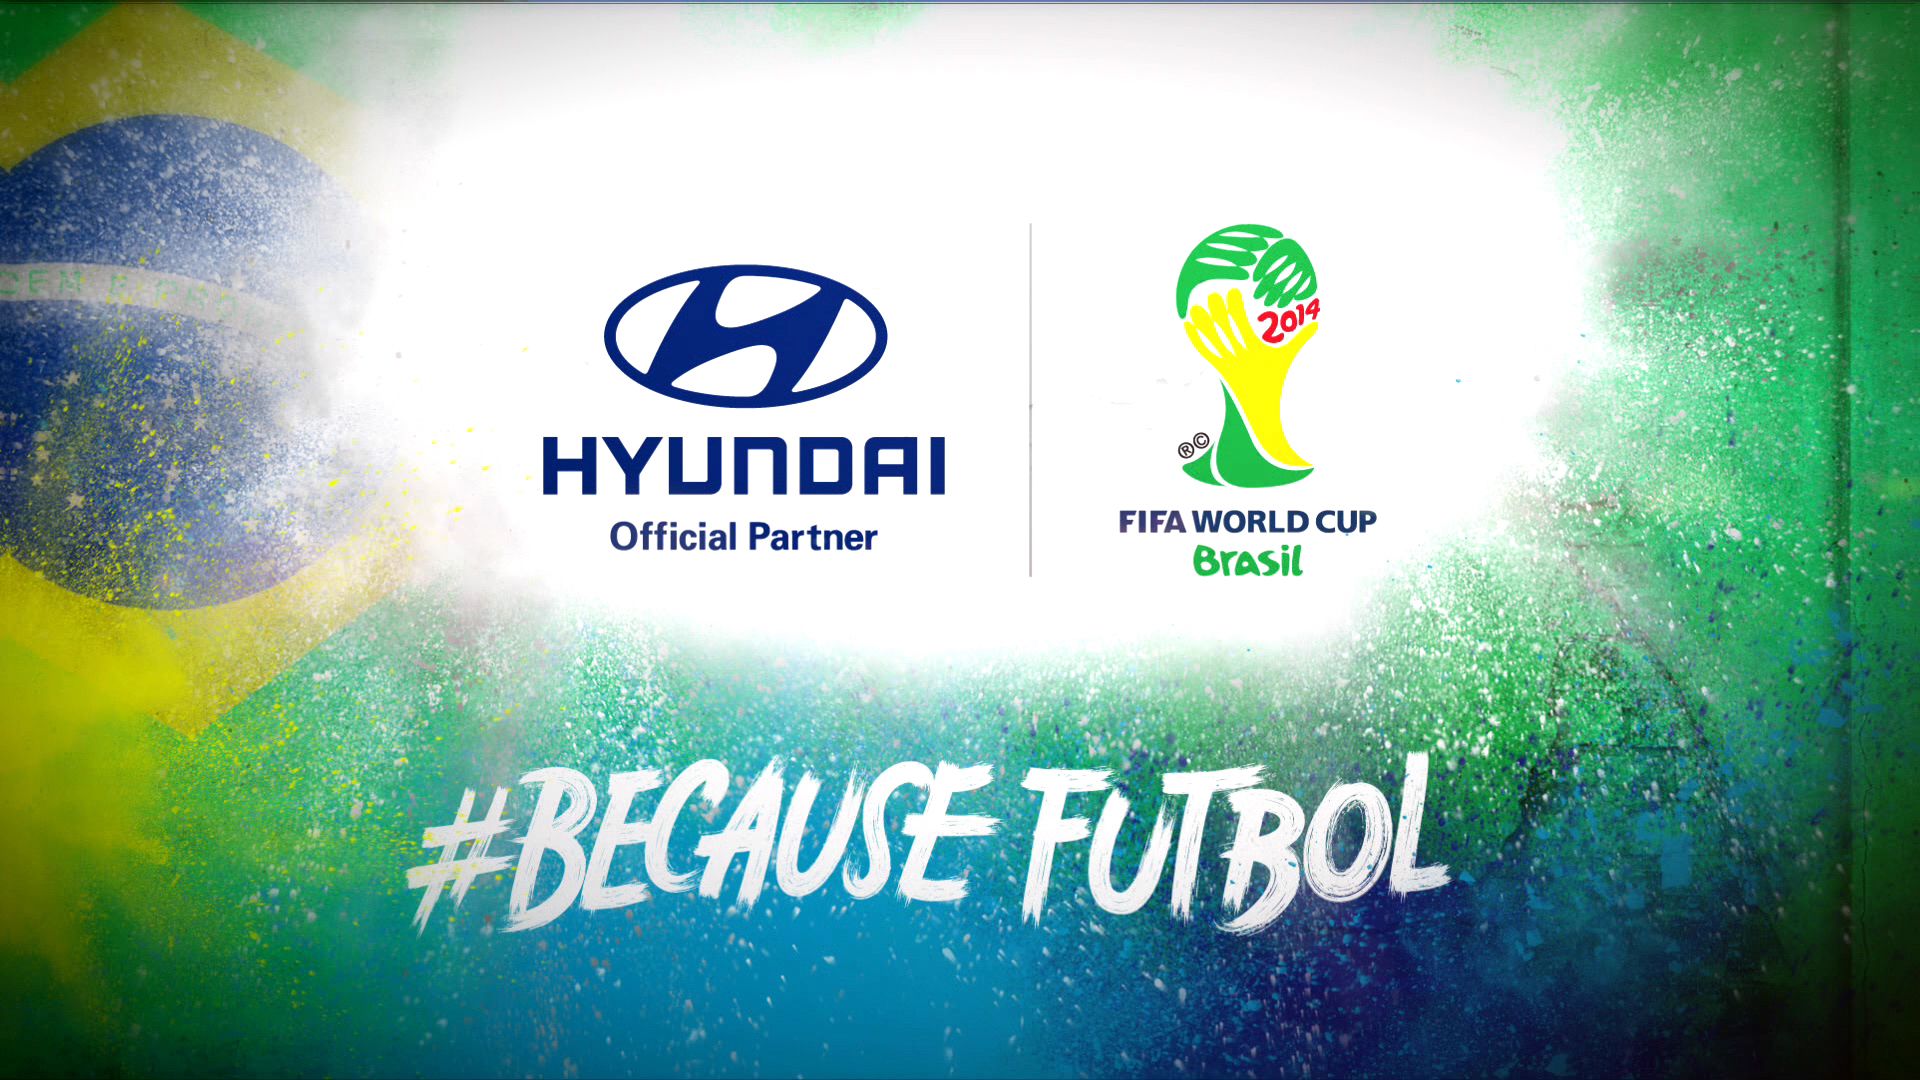 Hyundai: Because Futbol